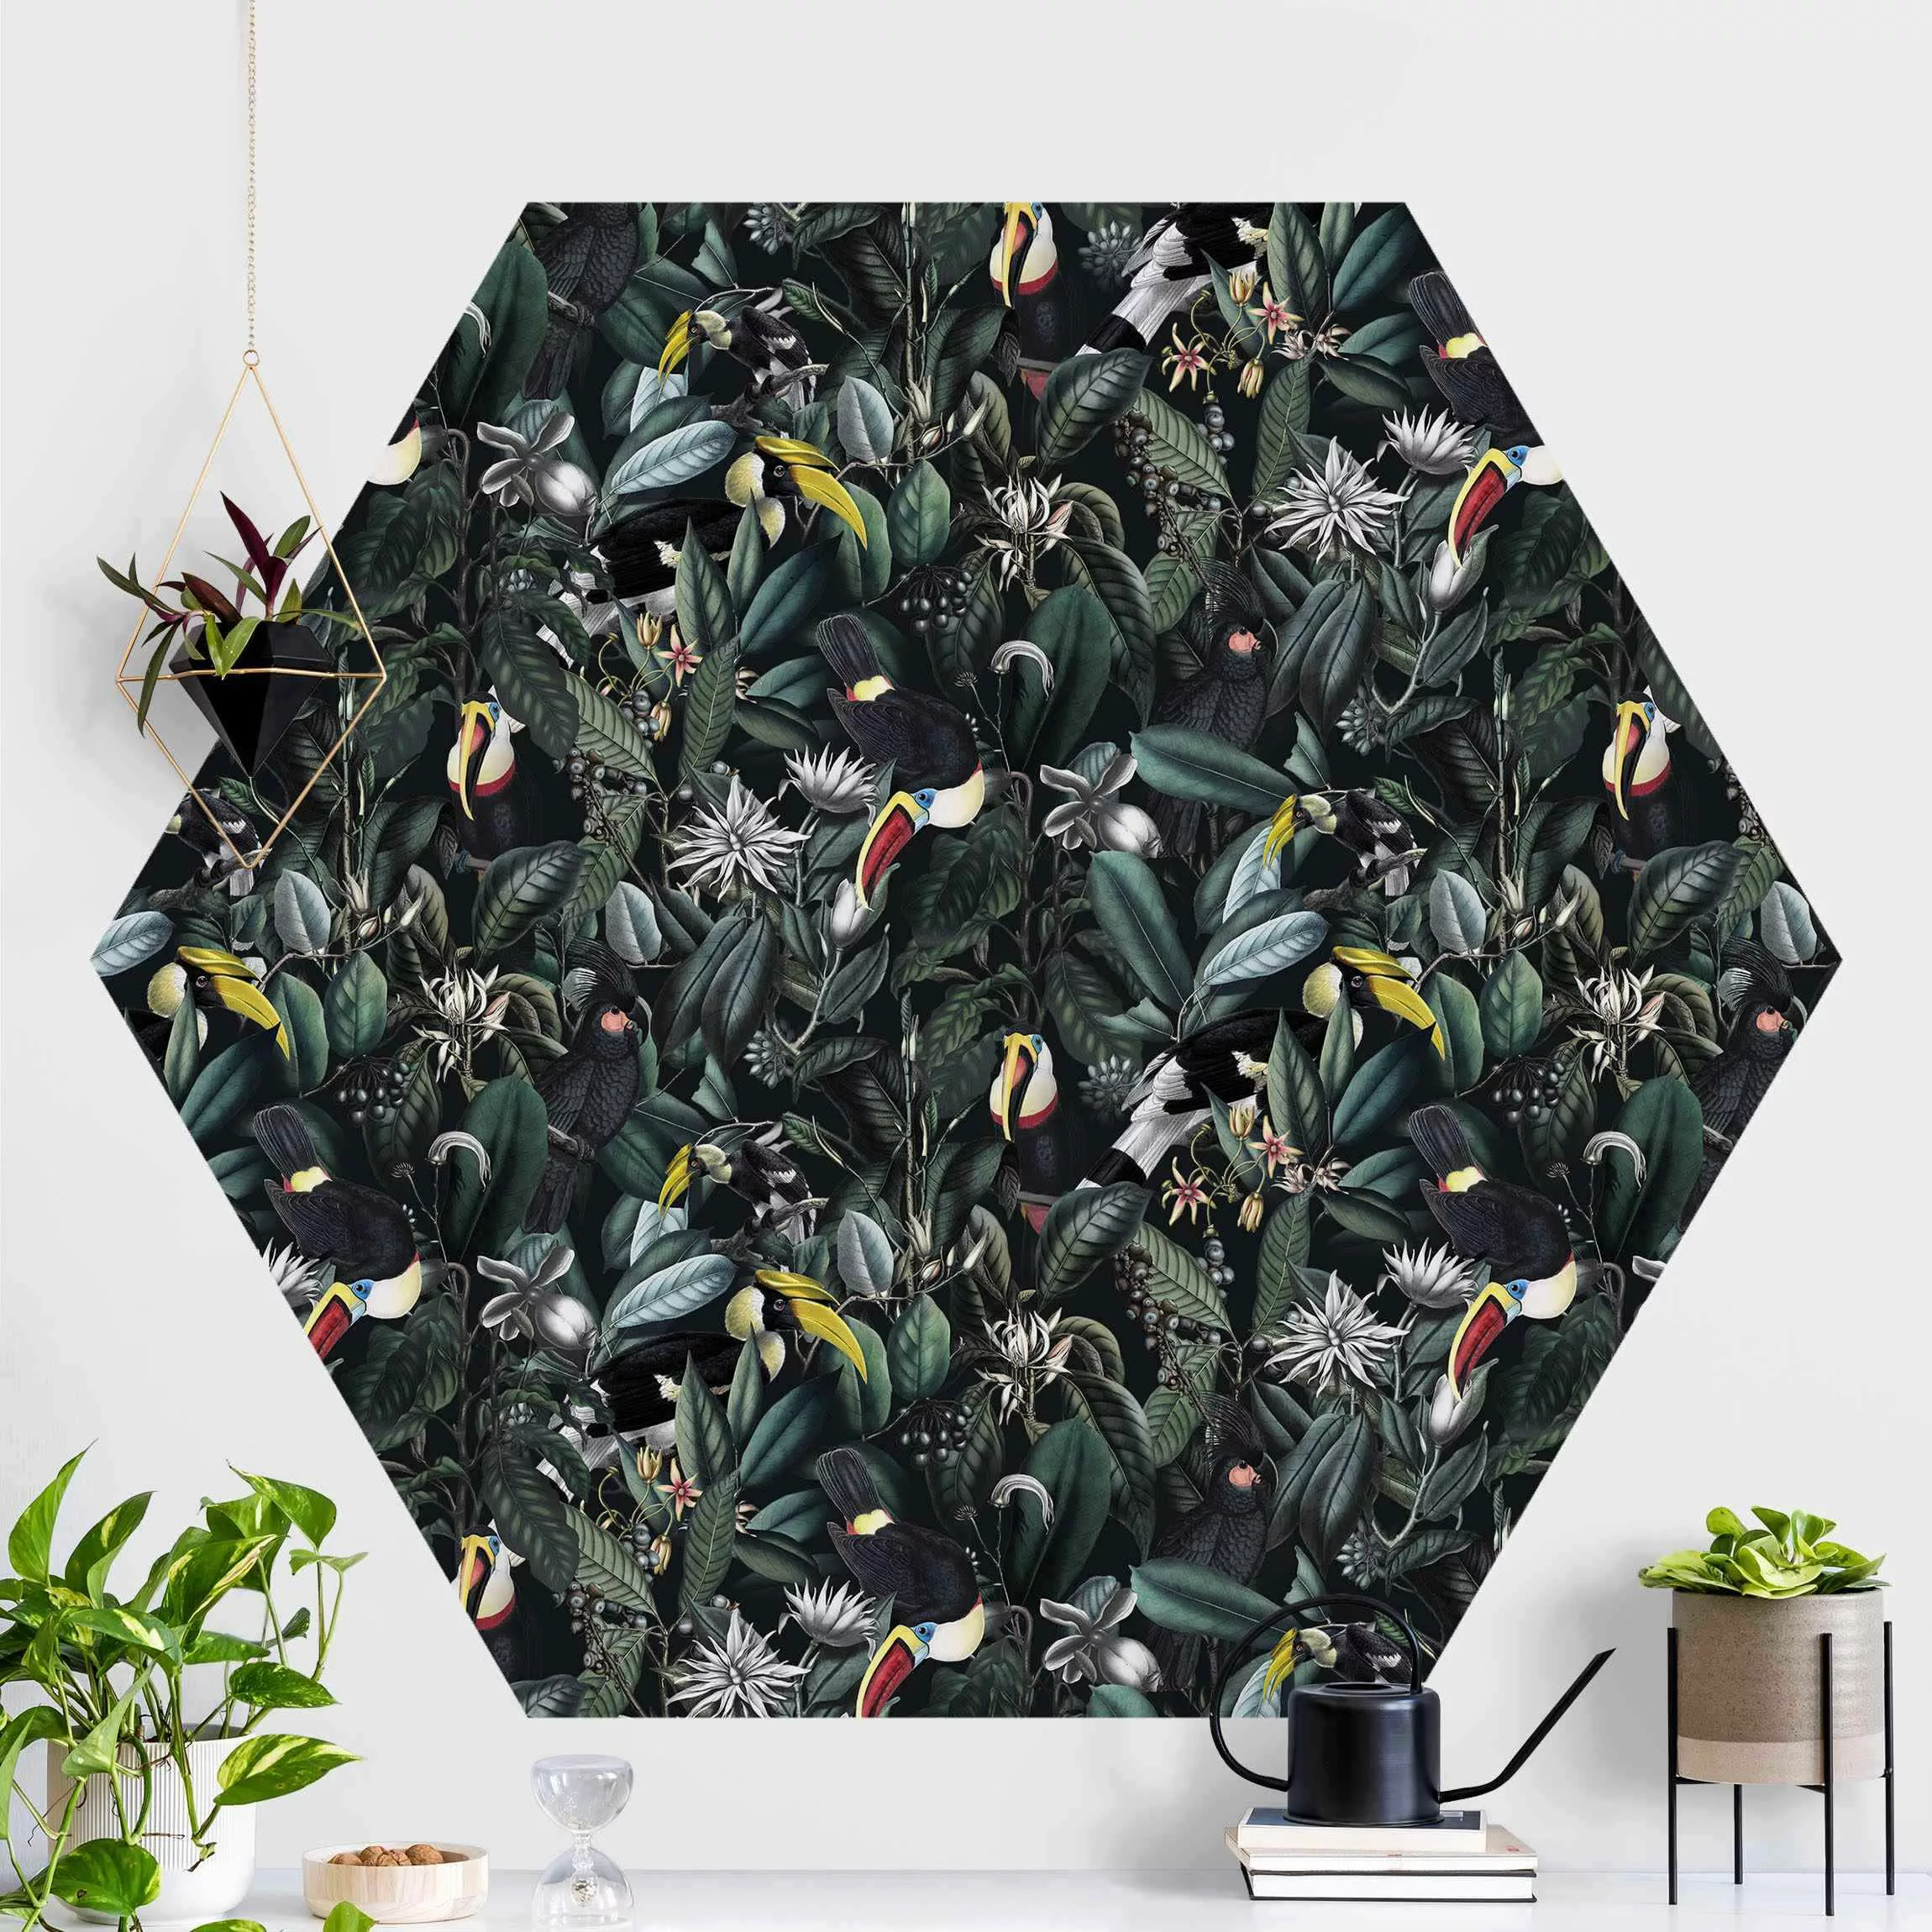 Hexagon Fototapete selbstklebend Vögel in dunkler Botanik günstig online kaufen